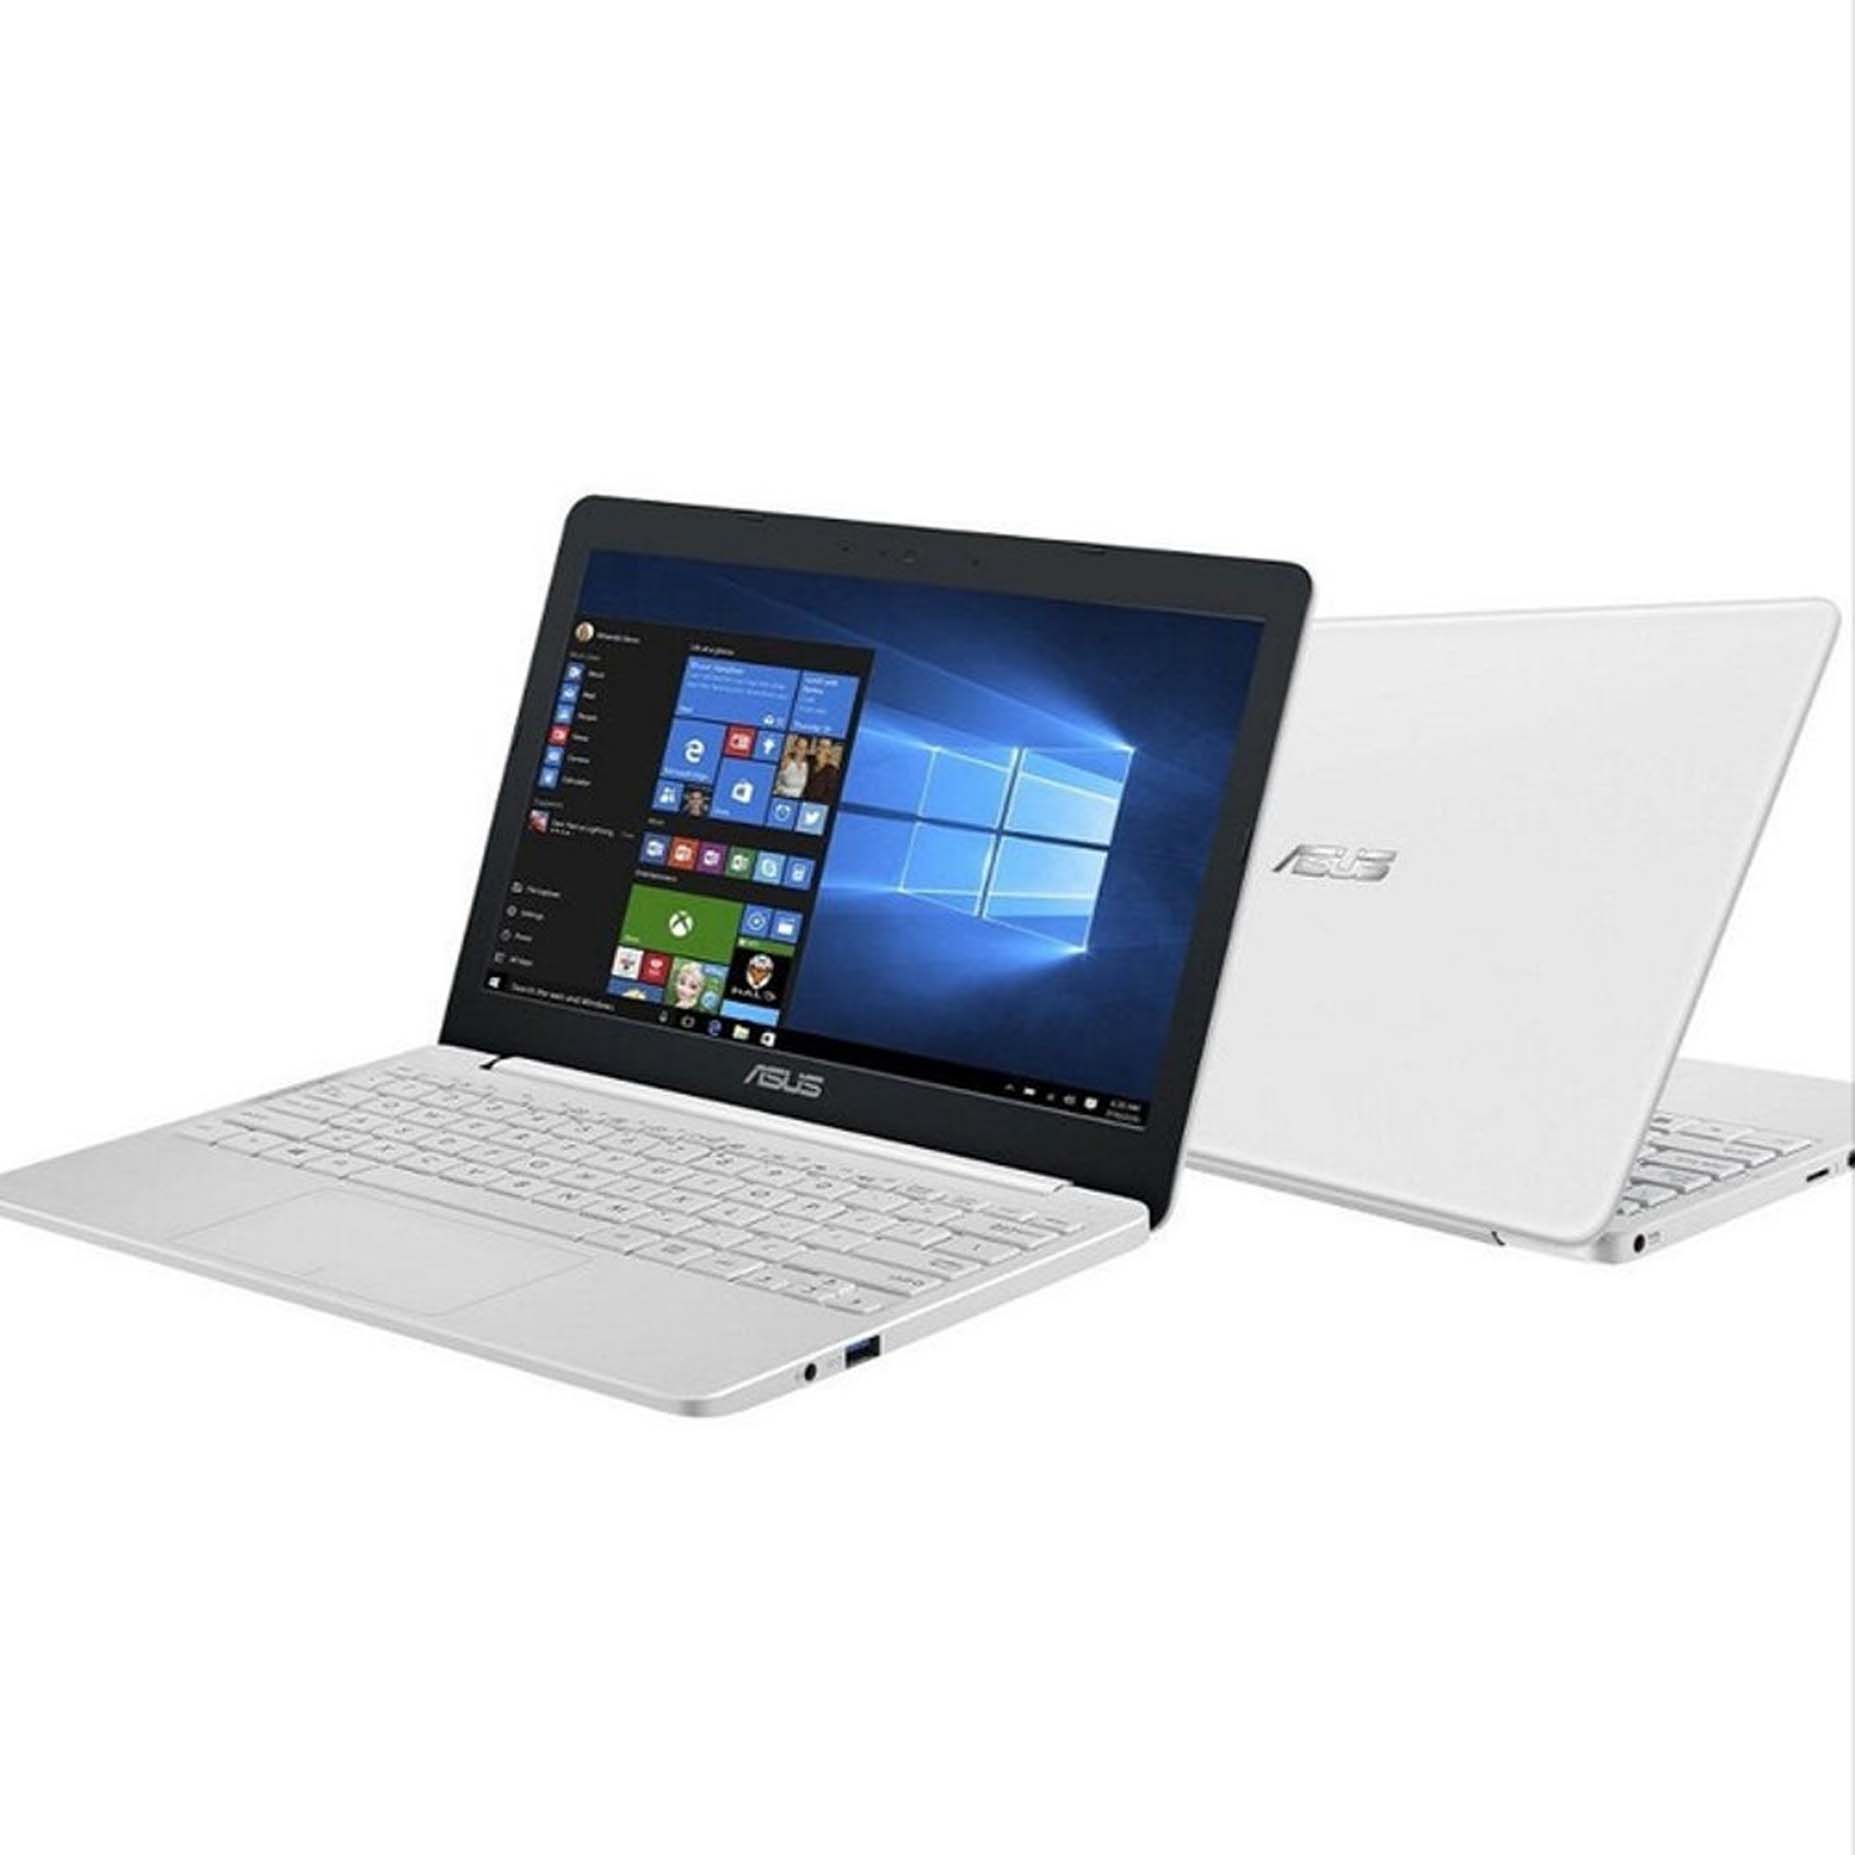 hARGA Asus Notebook E203MAH-FD012T Pear White Intel Celeron N4000 2GB 500GB 11.6 inch Win 10